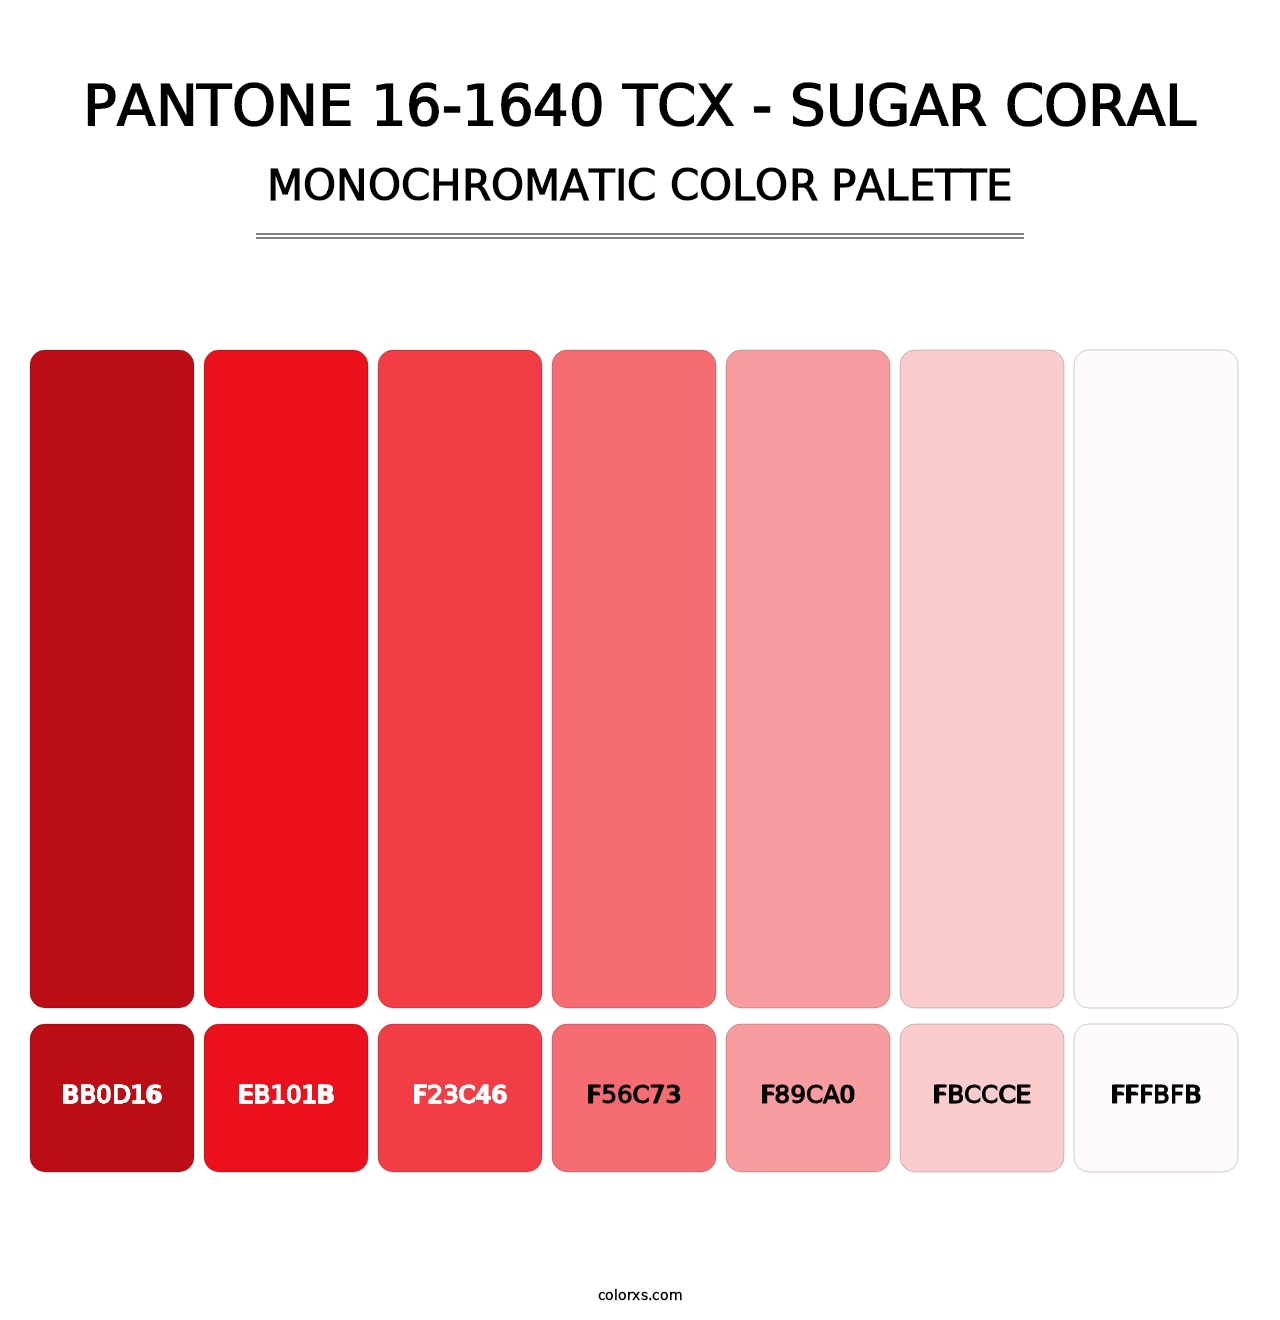 PANTONE 16-1640 TCX - Sugar Coral - Monochromatic Color Palette